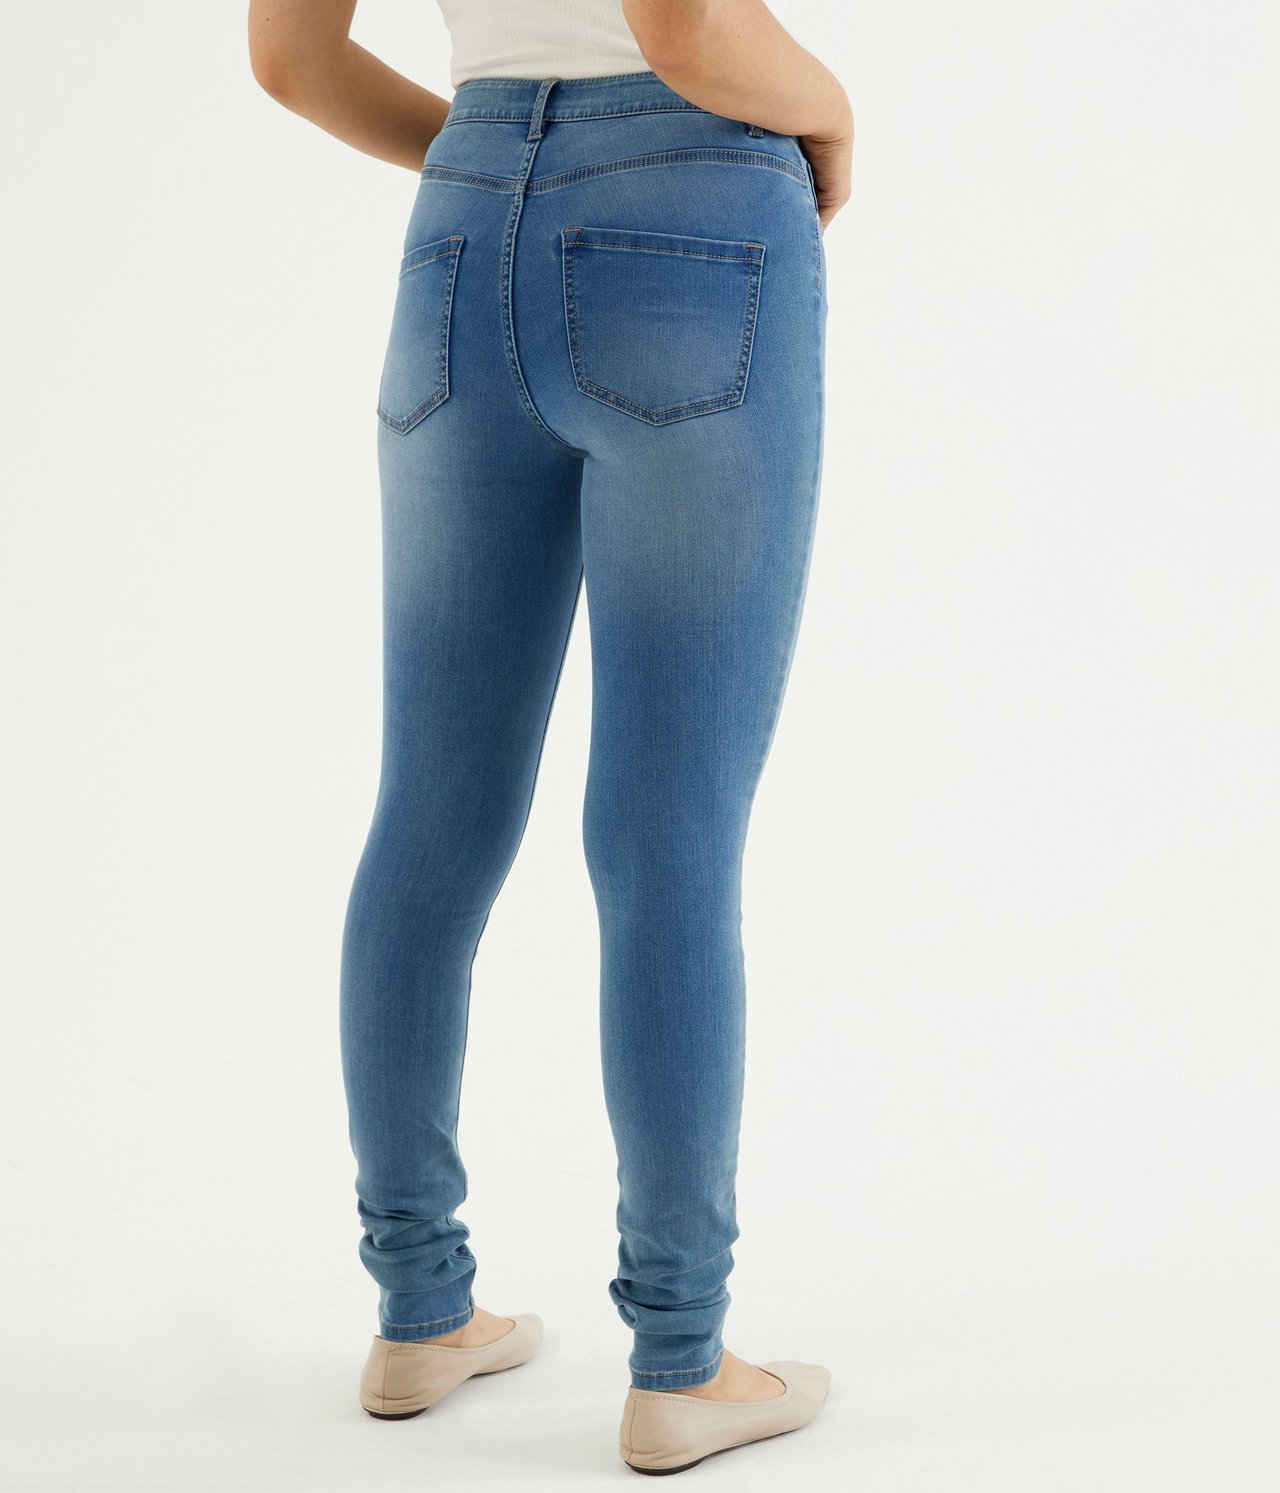 Super slim jeans extra long leg Denim - null - 2